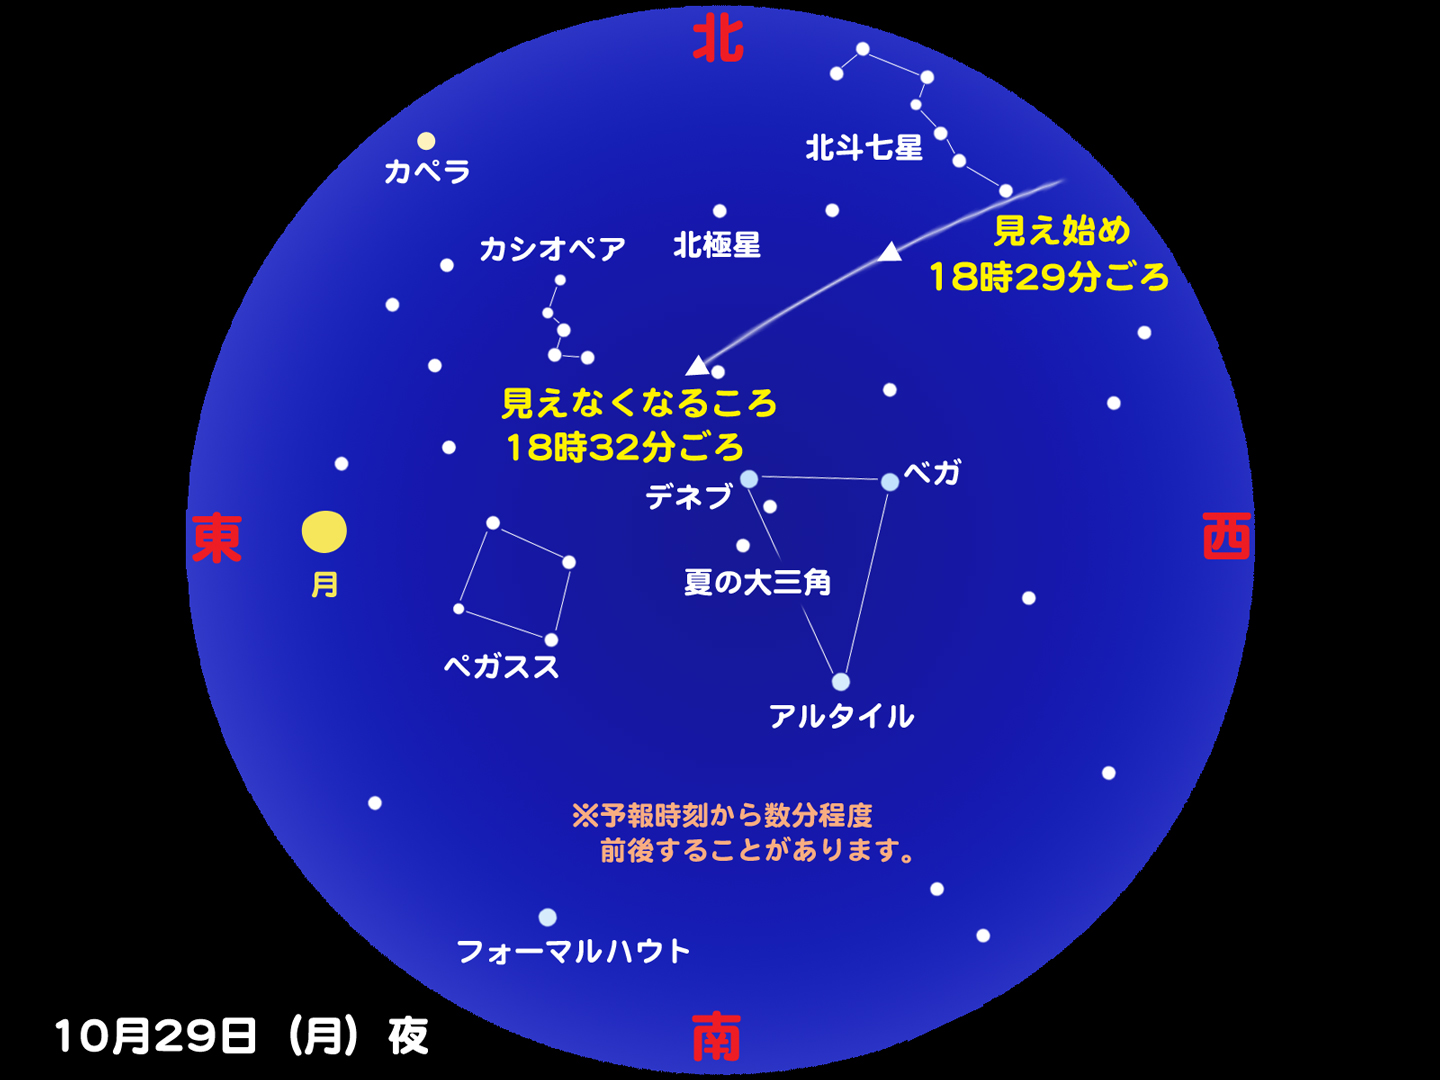 http://www.ncsm.city.nagoya.jp/study/astro/iss20121029_1.jpg